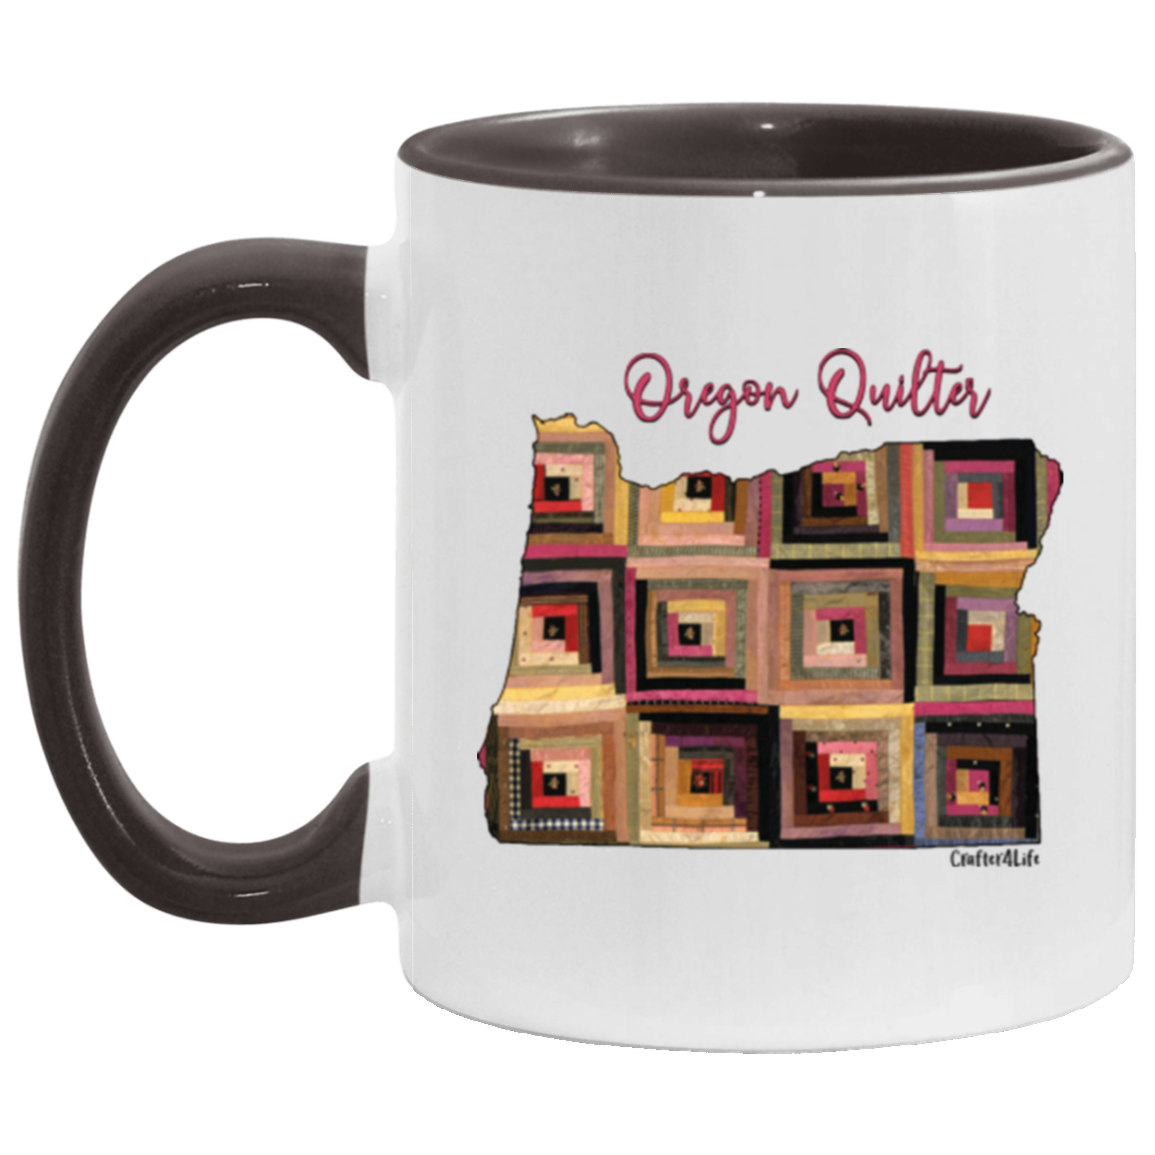 Oregon Quilter Mugs